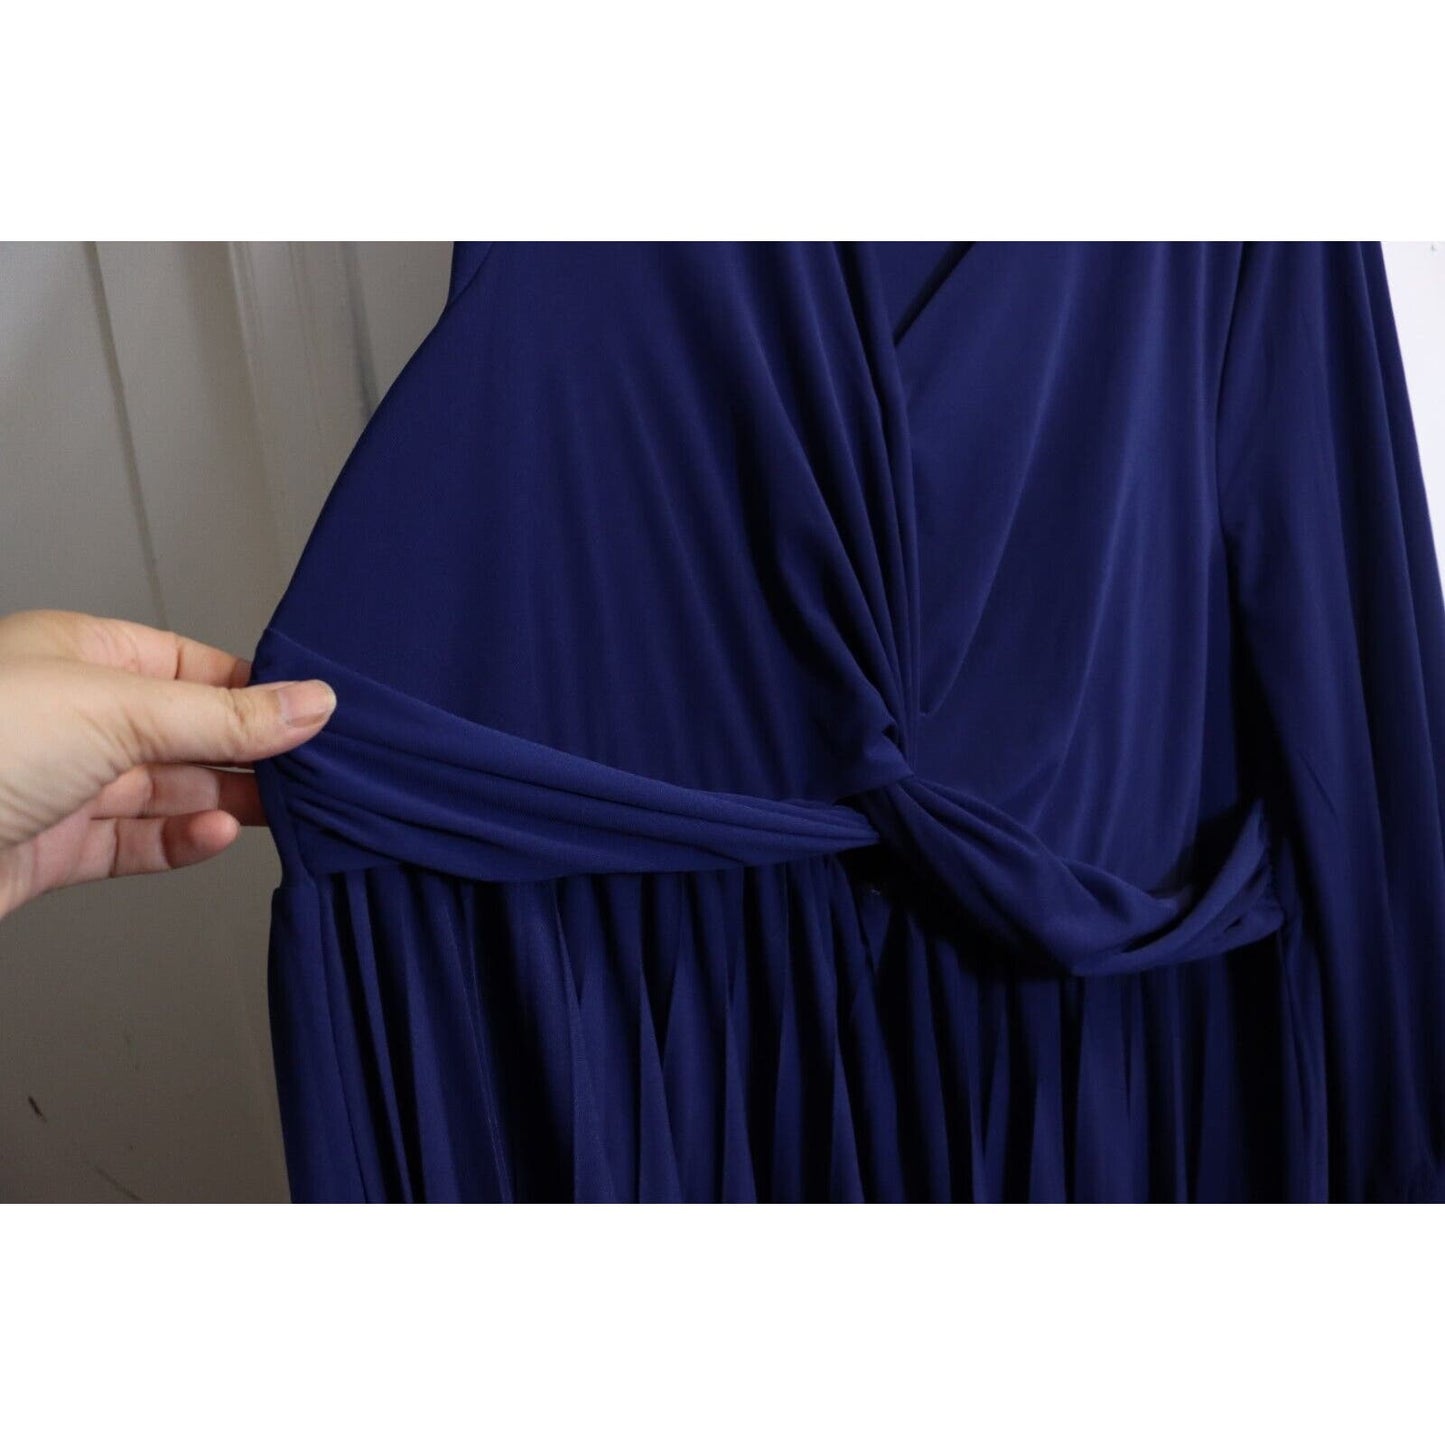 Eloquii Knot Front Pleated Skirt Long Sleeve Midi Dress Plus